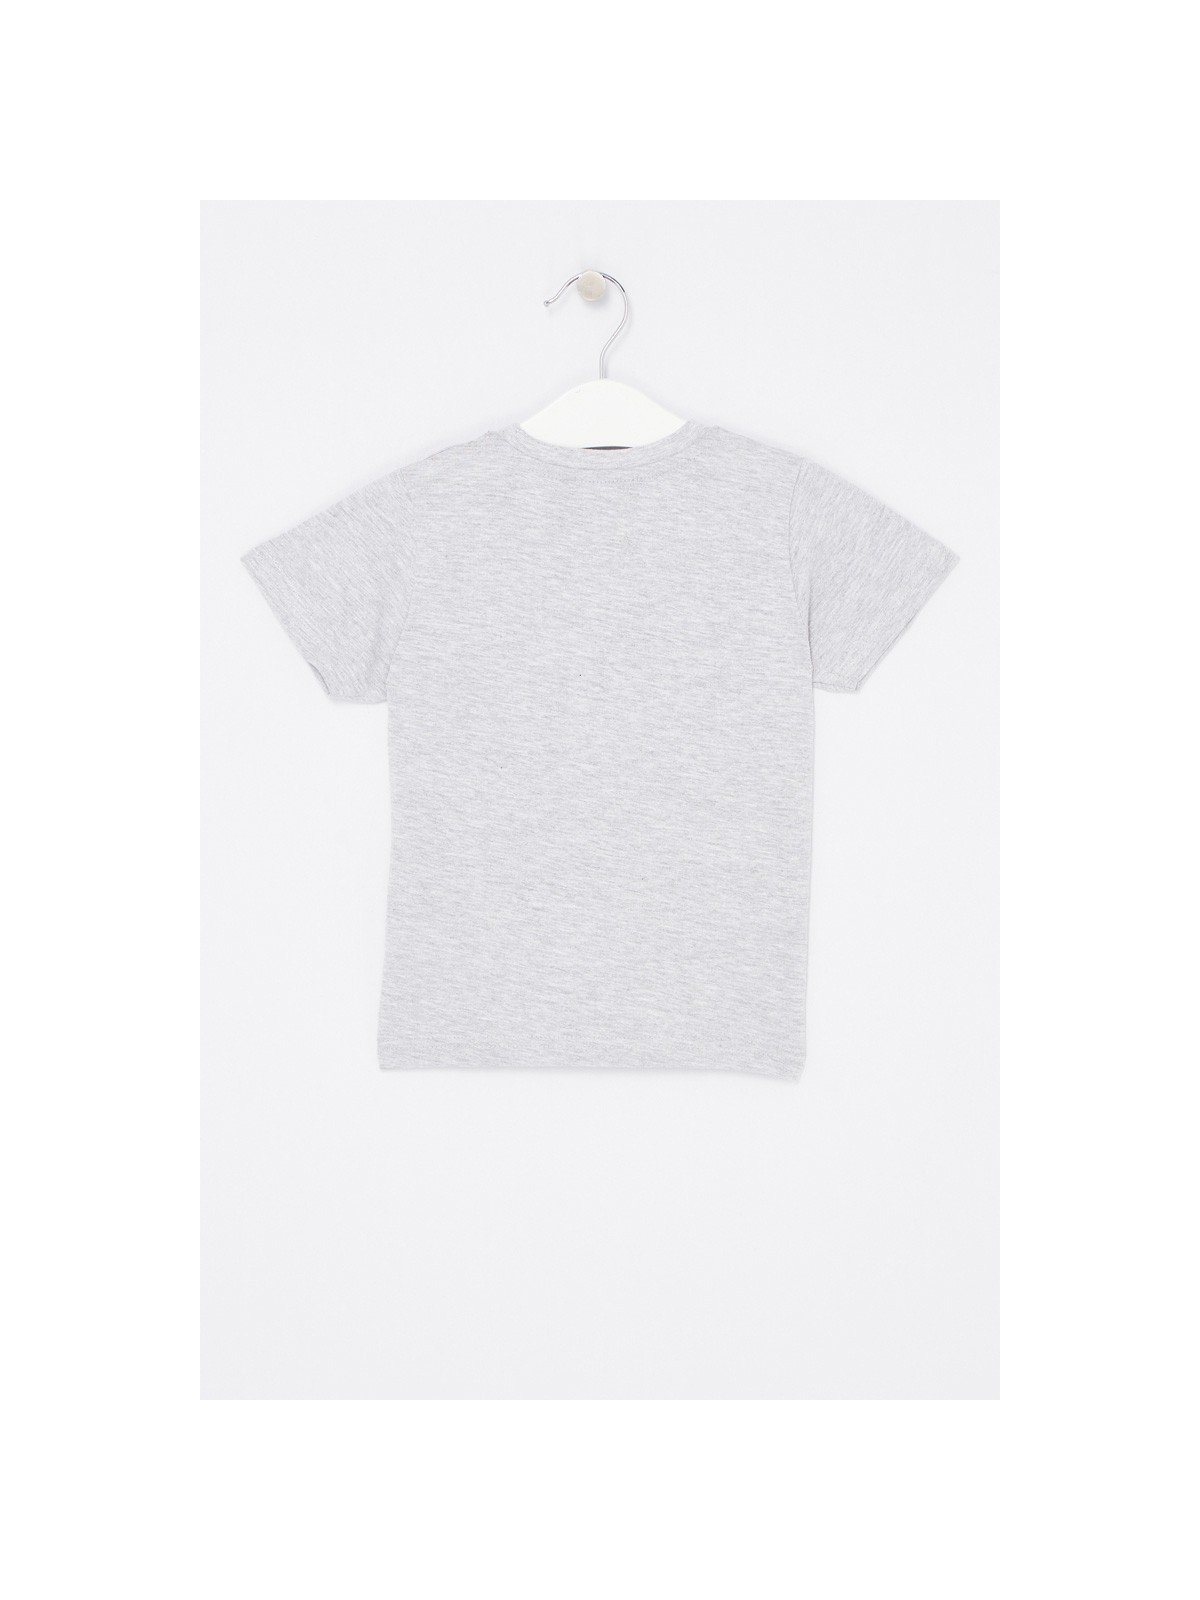 RG512 T-shirt short sleeves